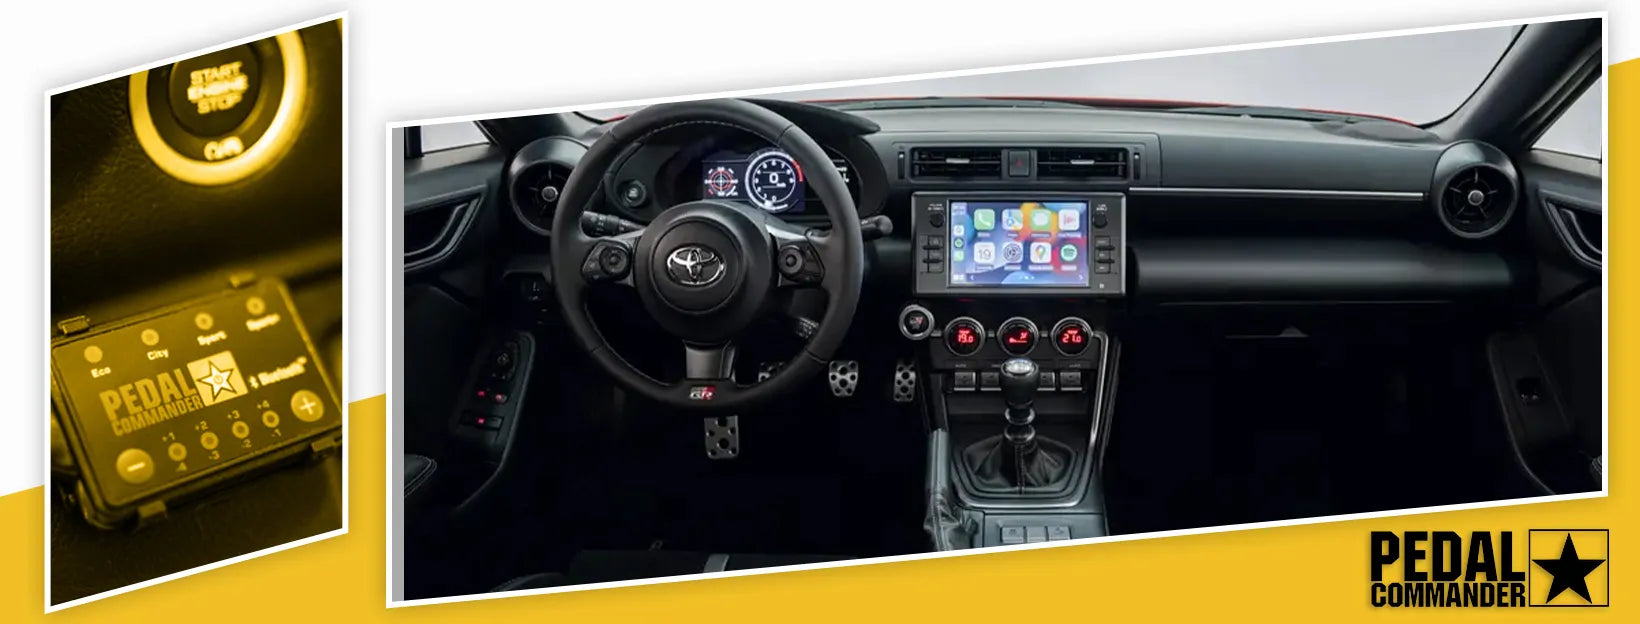 Pedal Commander for Toyota GR86 - interior